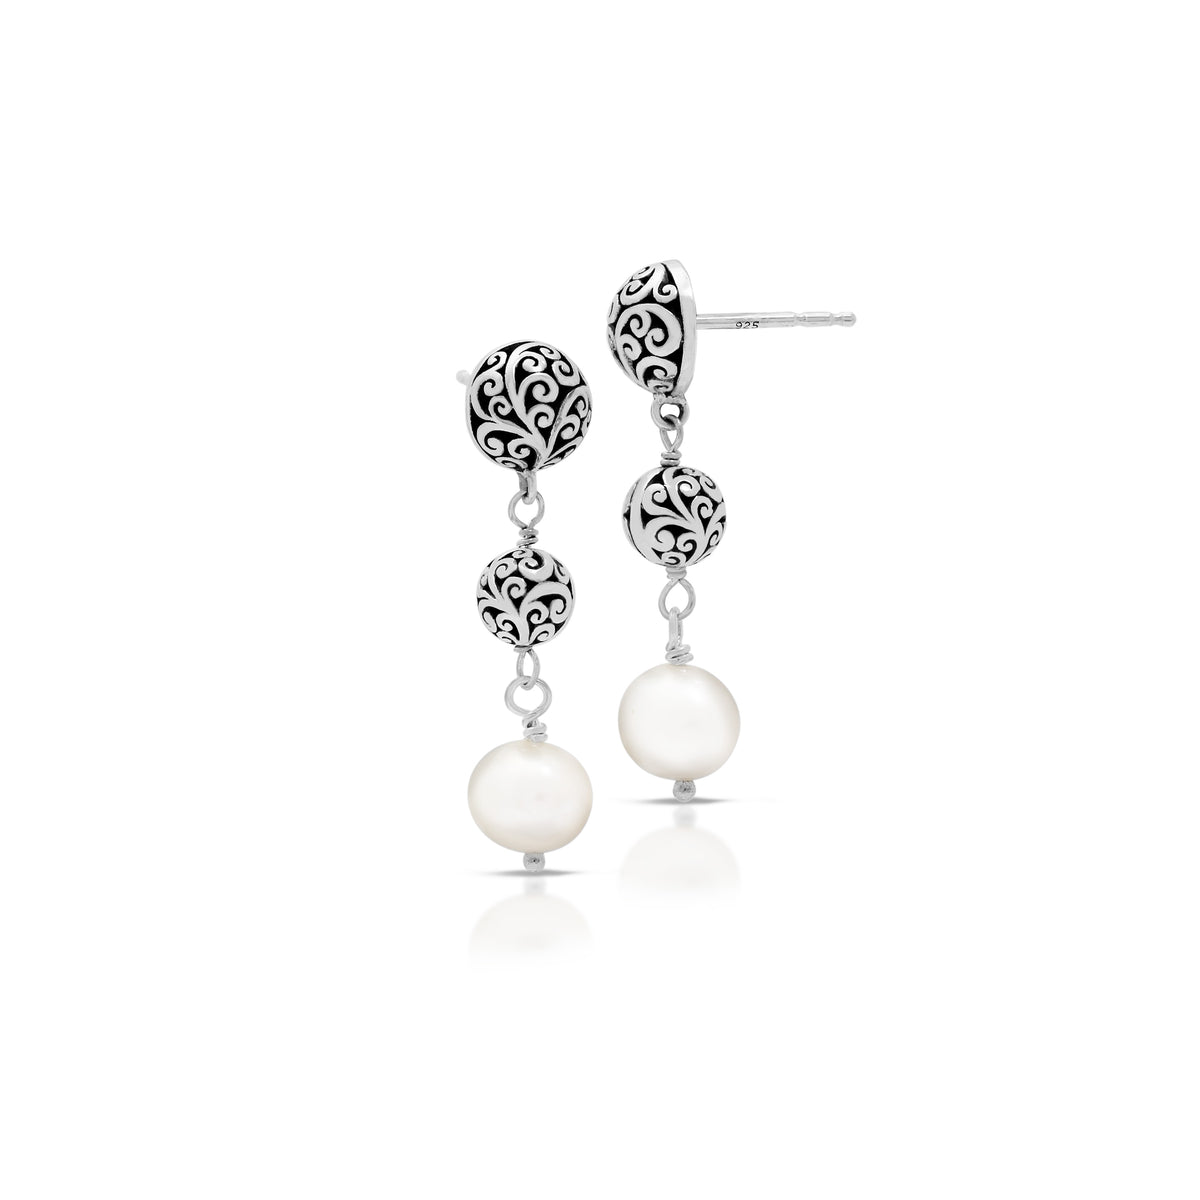 White Pearl & LH Scroll Beads Drop Post Earrings (30mm)